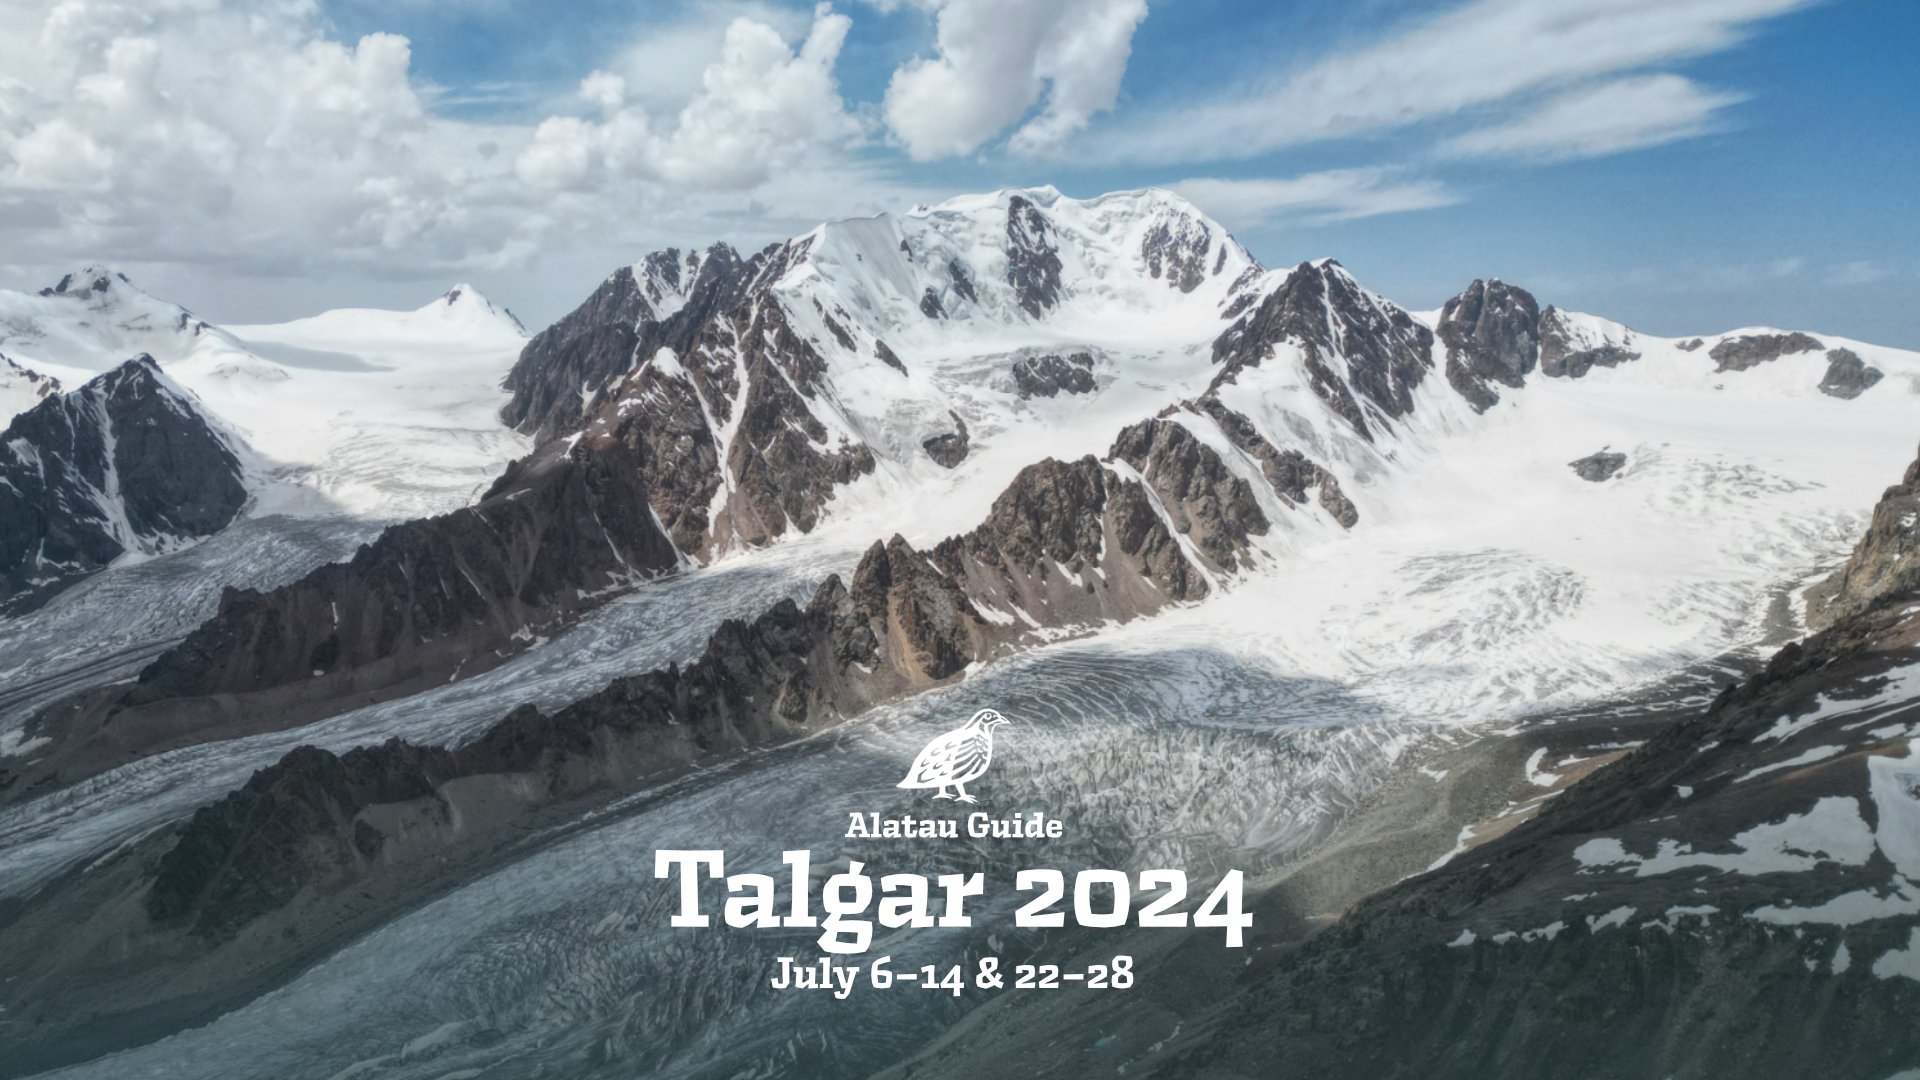 Climb Mt. Talgar with a guide